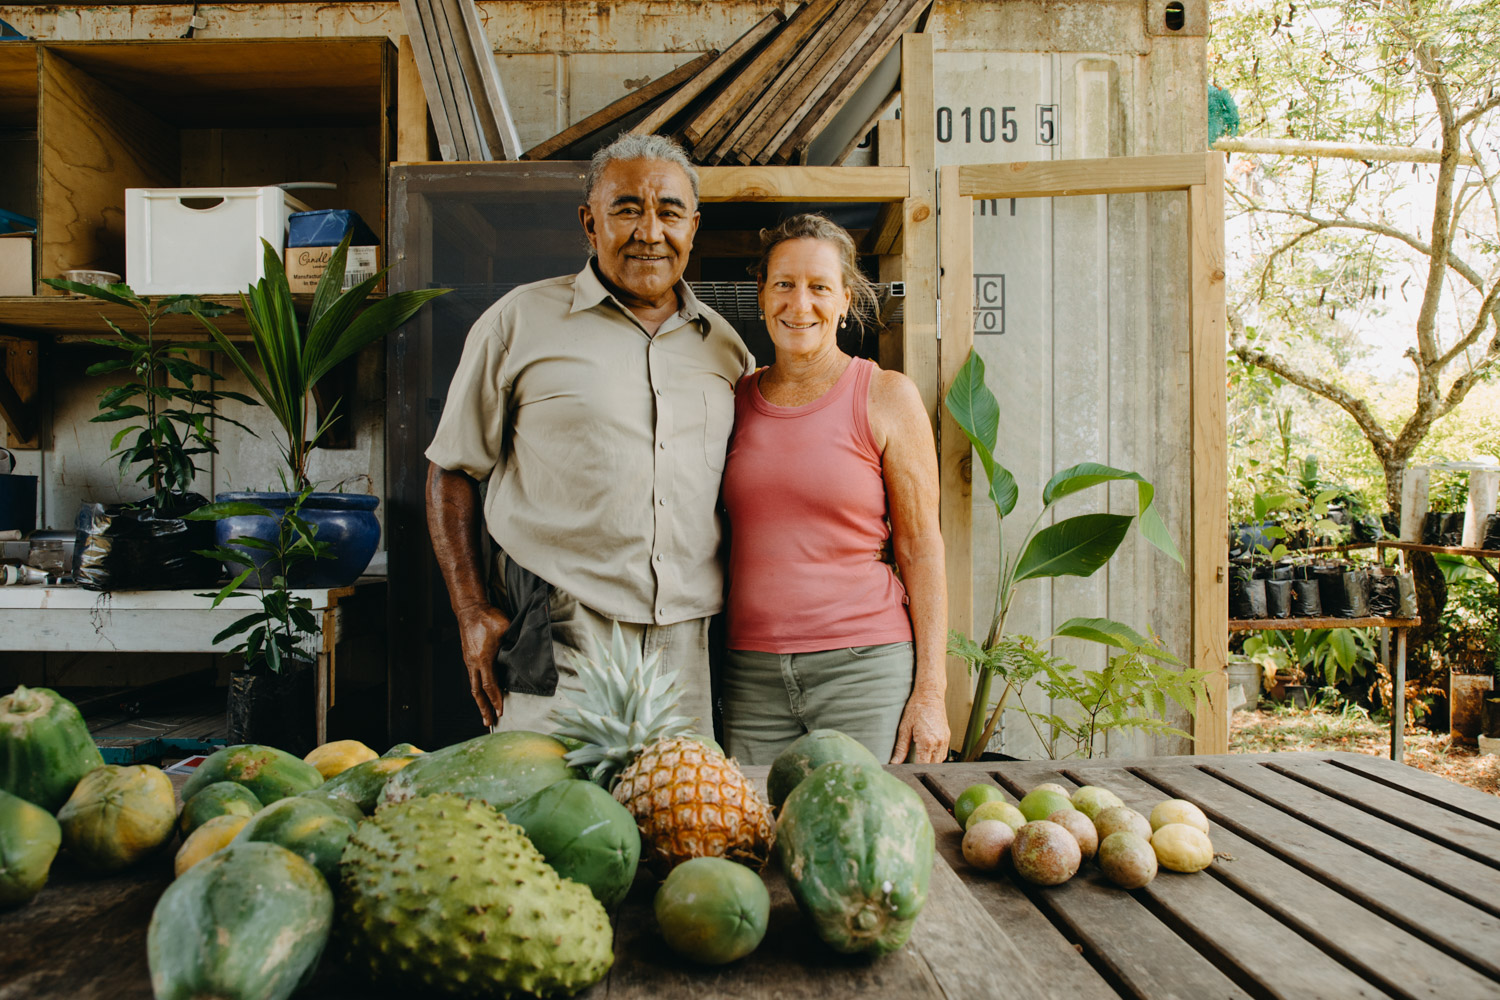 Ifieleeleplantation-Samoa-organicfarm-healthyeating-farmer-agriculture-documentary-photography-documentaryfilm-organicfarming-5